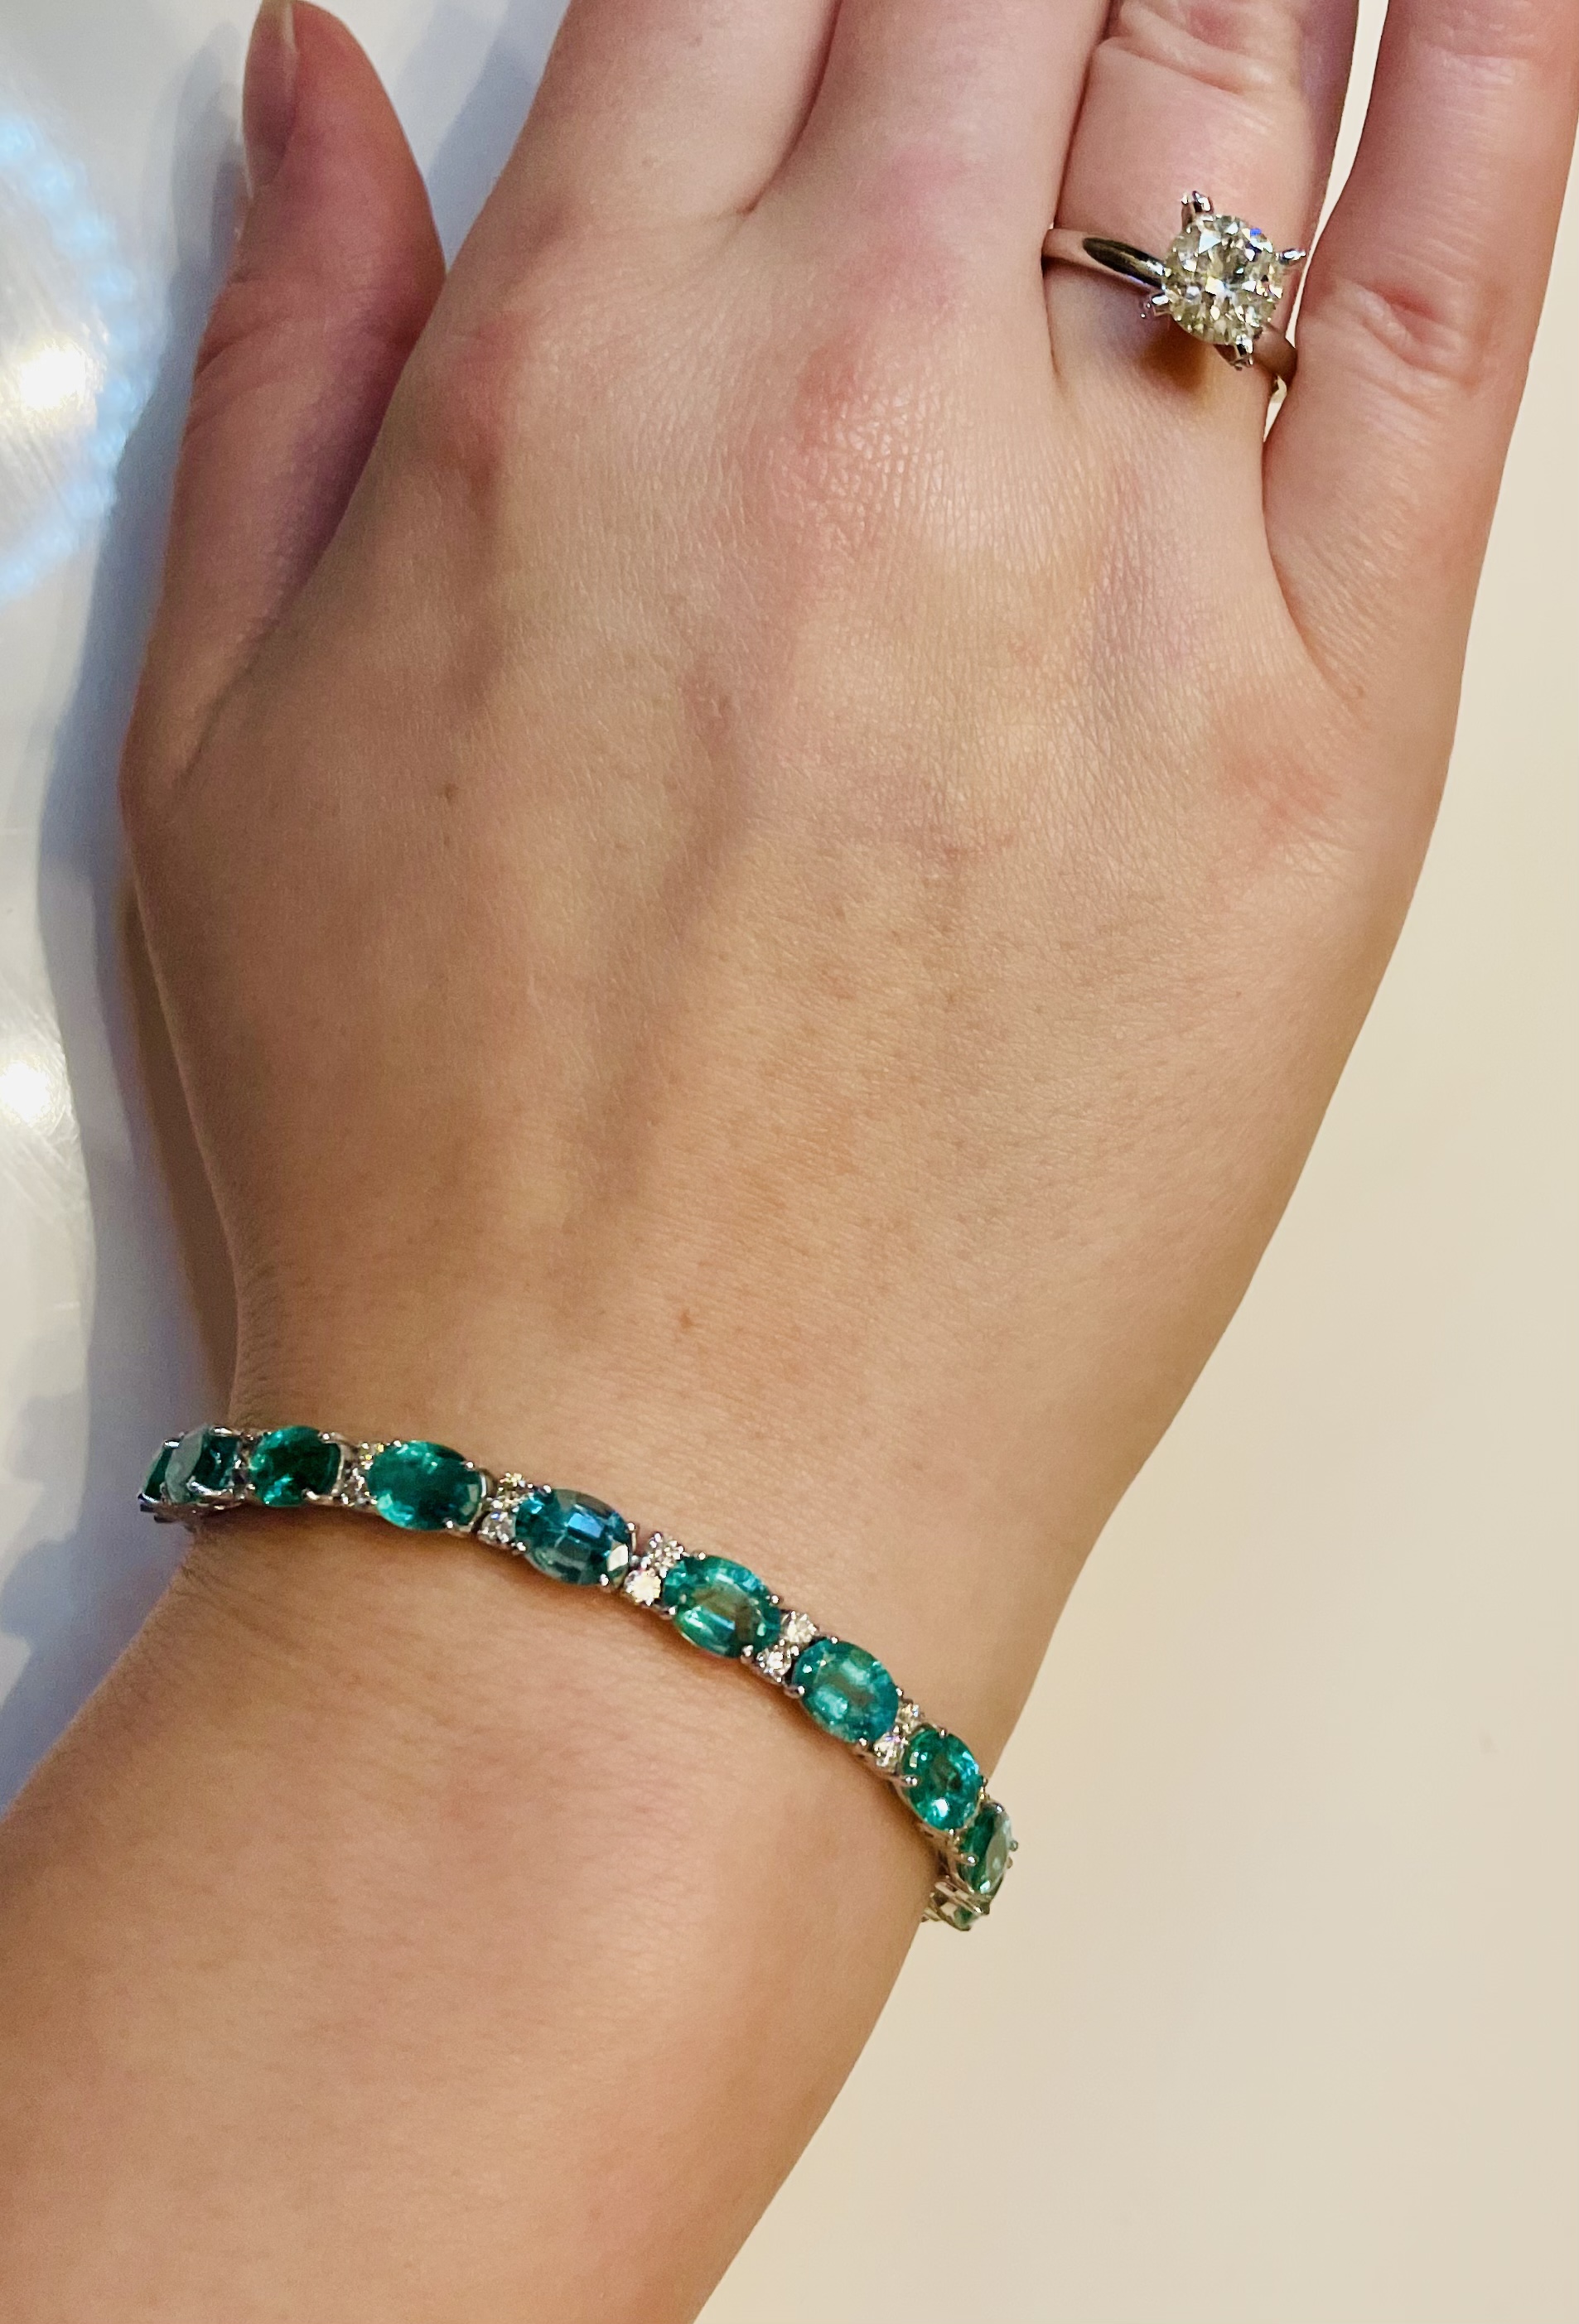 Beautiful 14.5ct Natural Emerald Bracelet With Natural Diamonds & 18k Gold - Image 7 of 7